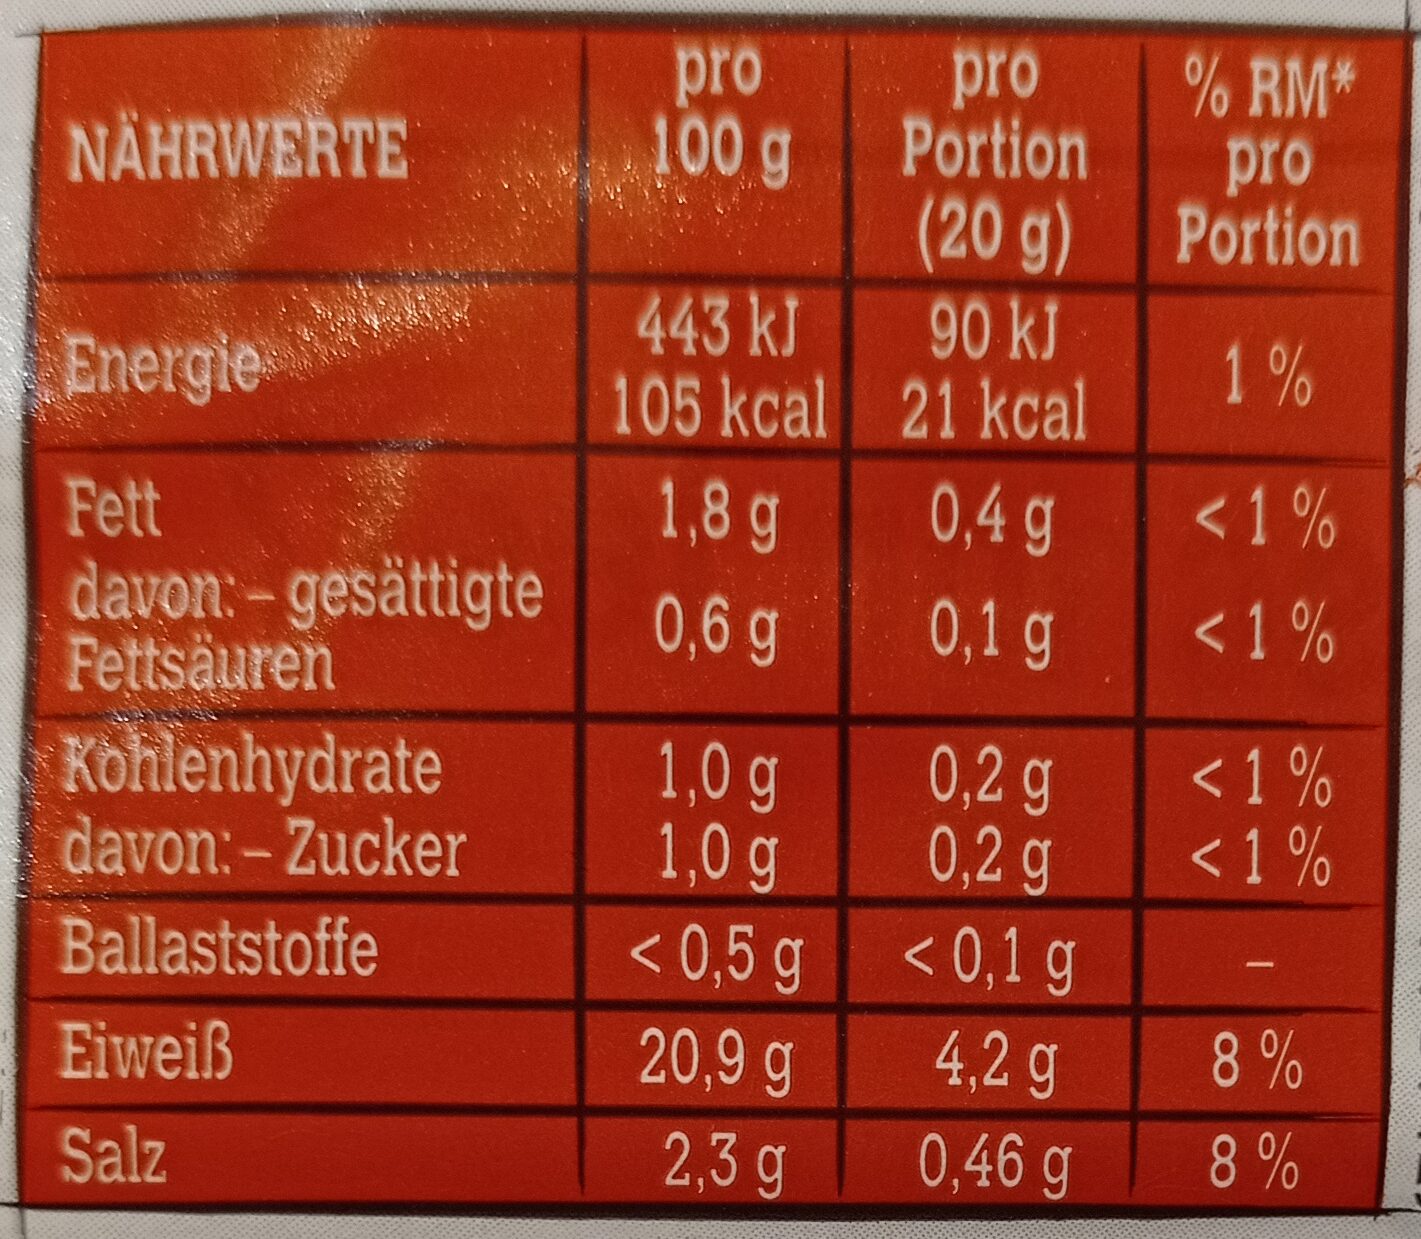 Hähnchenbrust ofengebacken - Nutrition facts - de